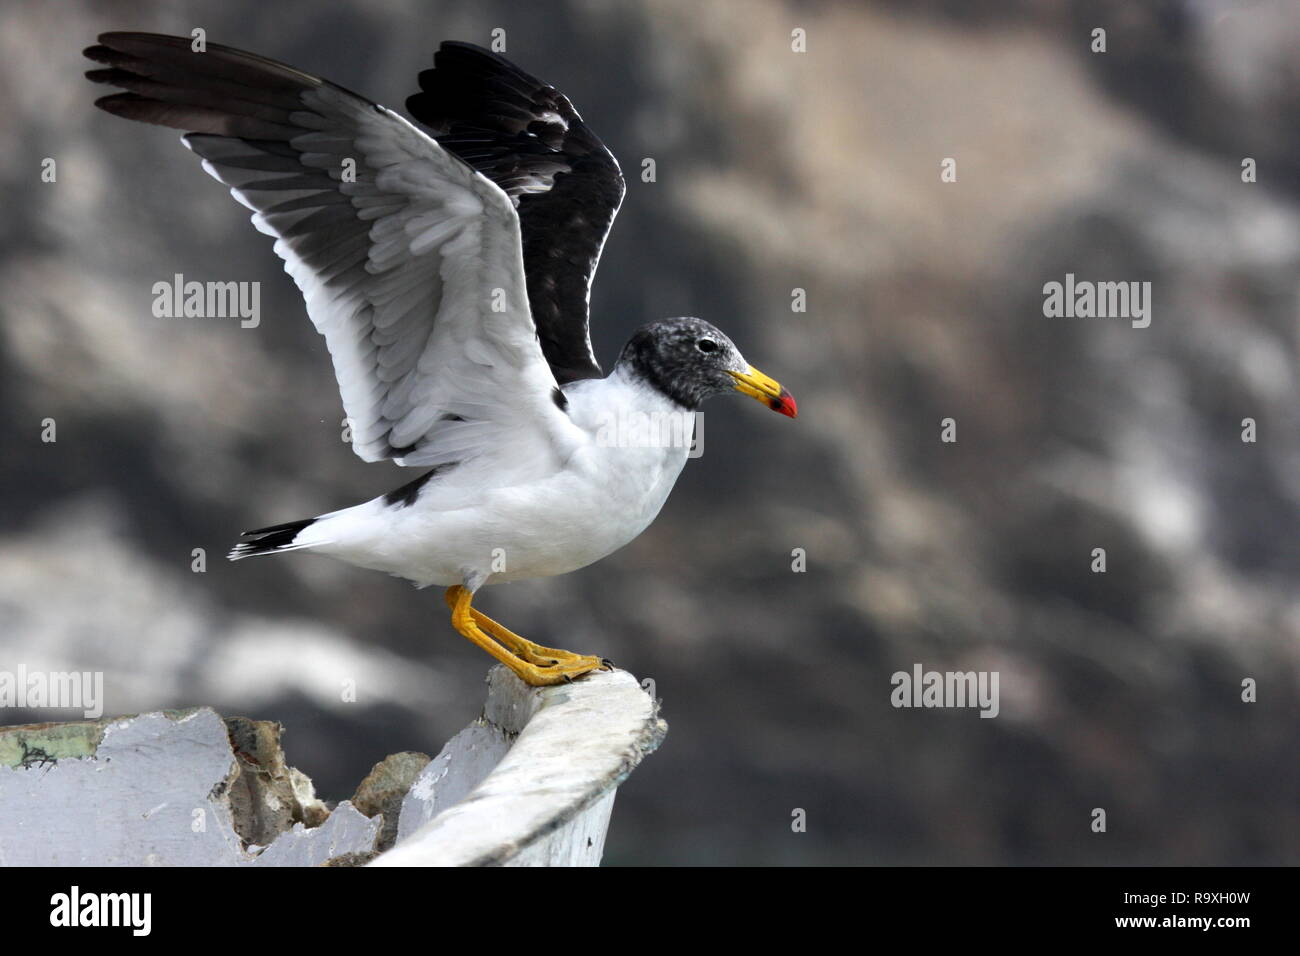 Belcher's gull, Larus belcheri, Pucusana Peru Stock Photo